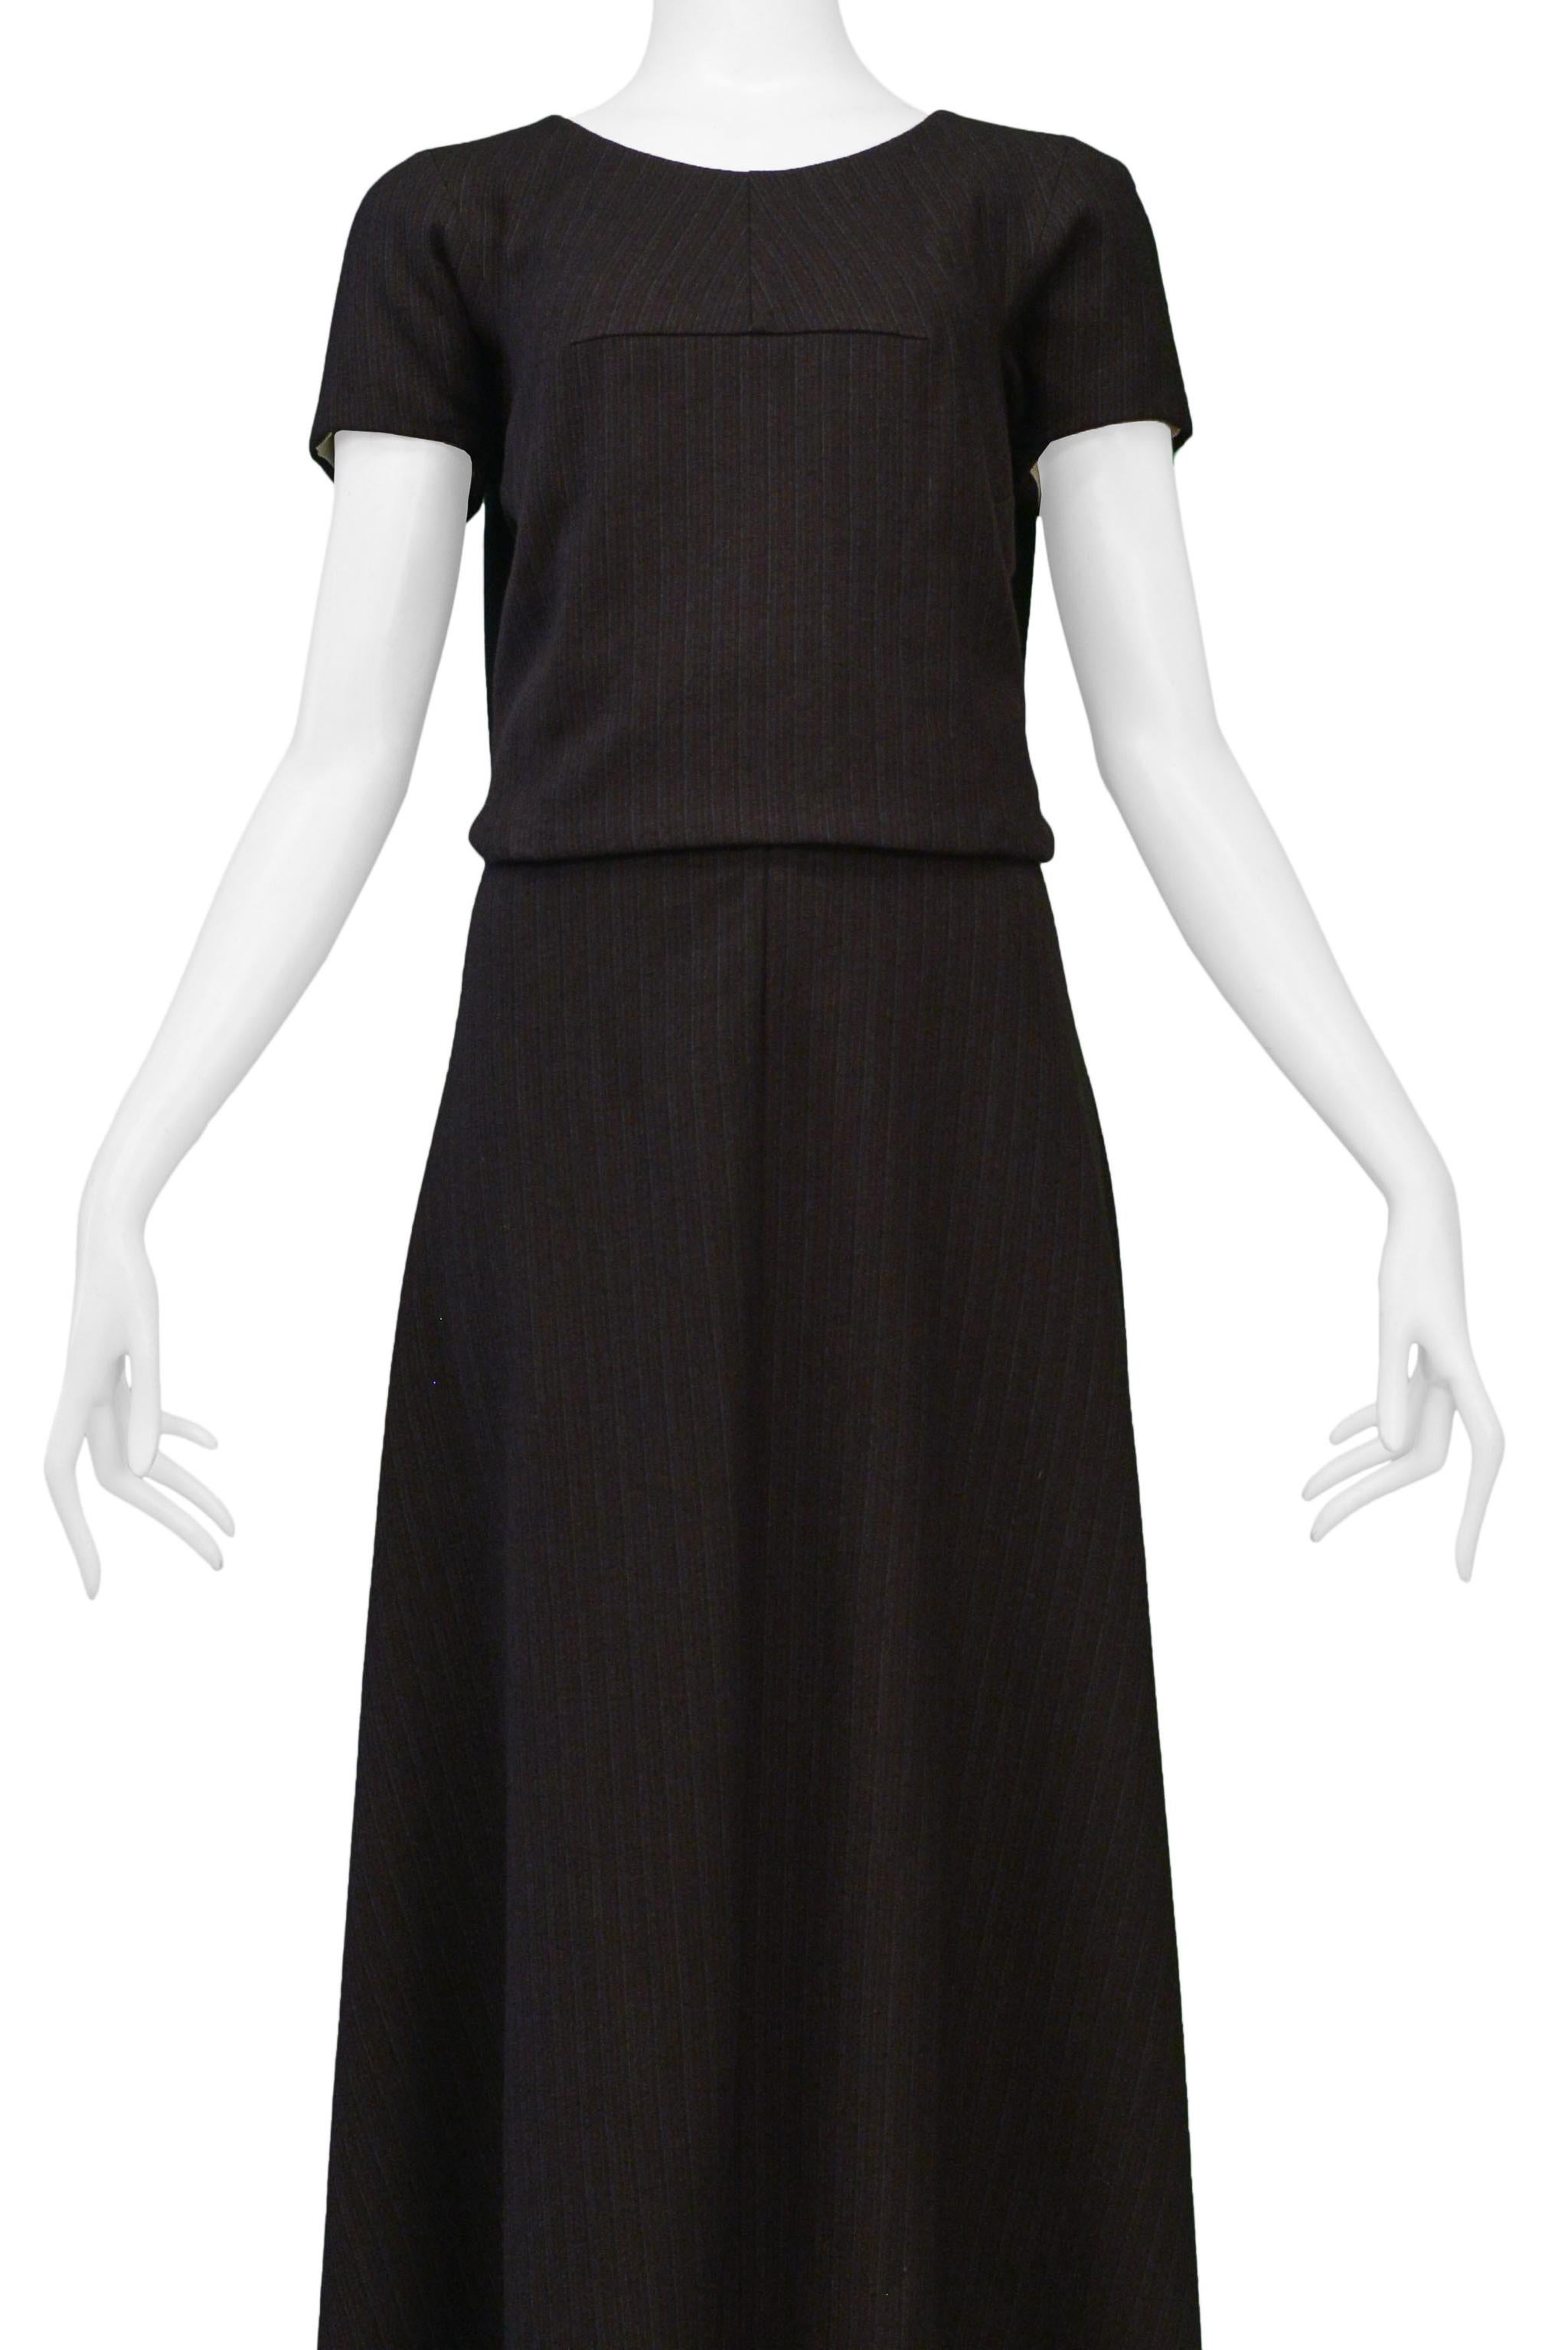 Junya Watanabe Brown Wool Pinstripe Concept Maxi Dress 1996 For Sale 1